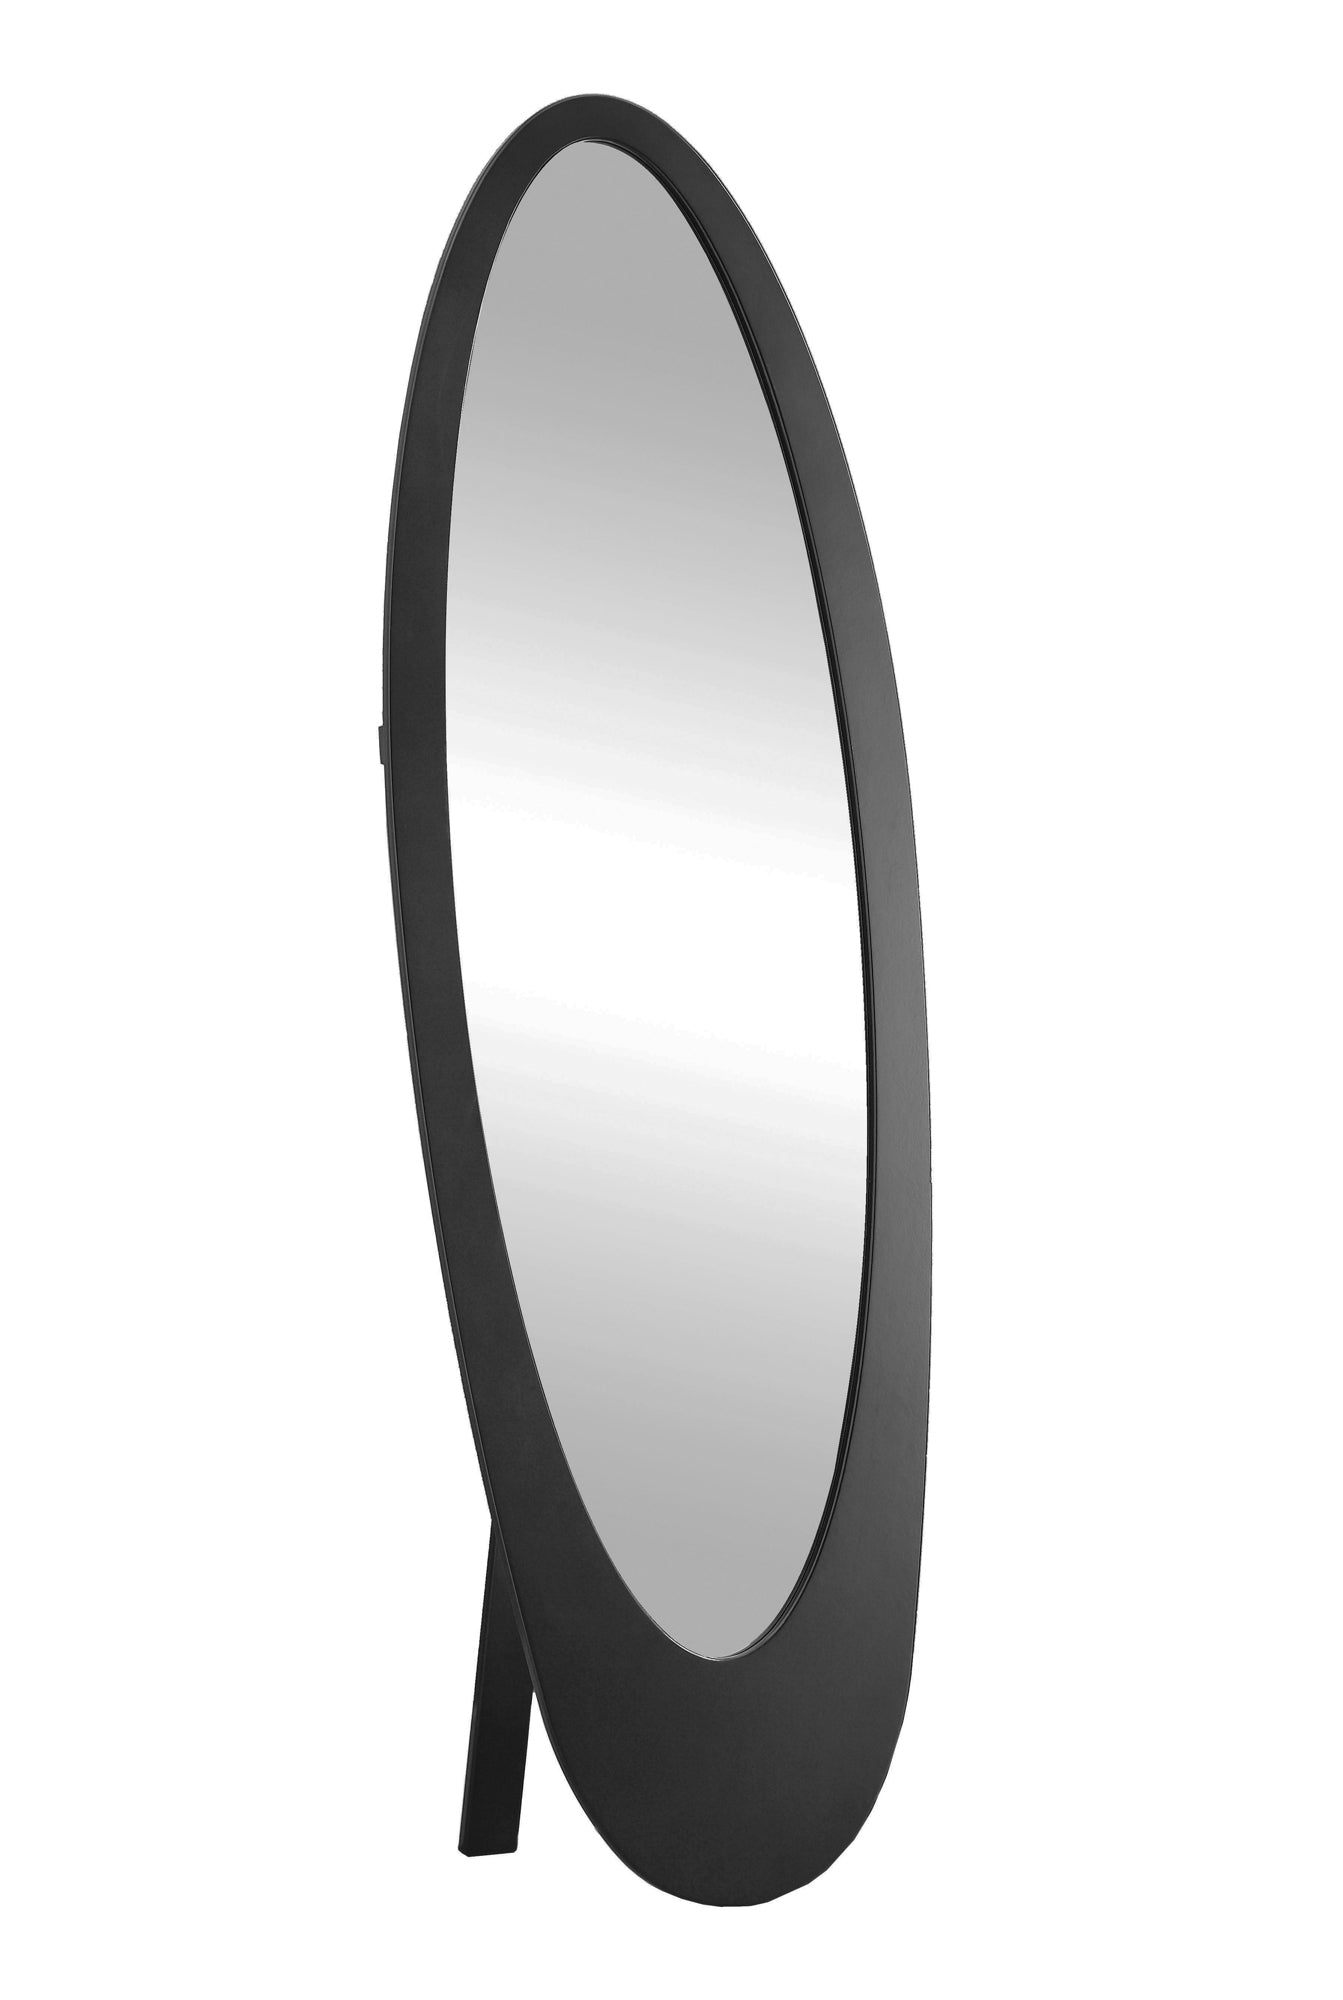 Mirror - 59H / Black Contemporary Oval Frame